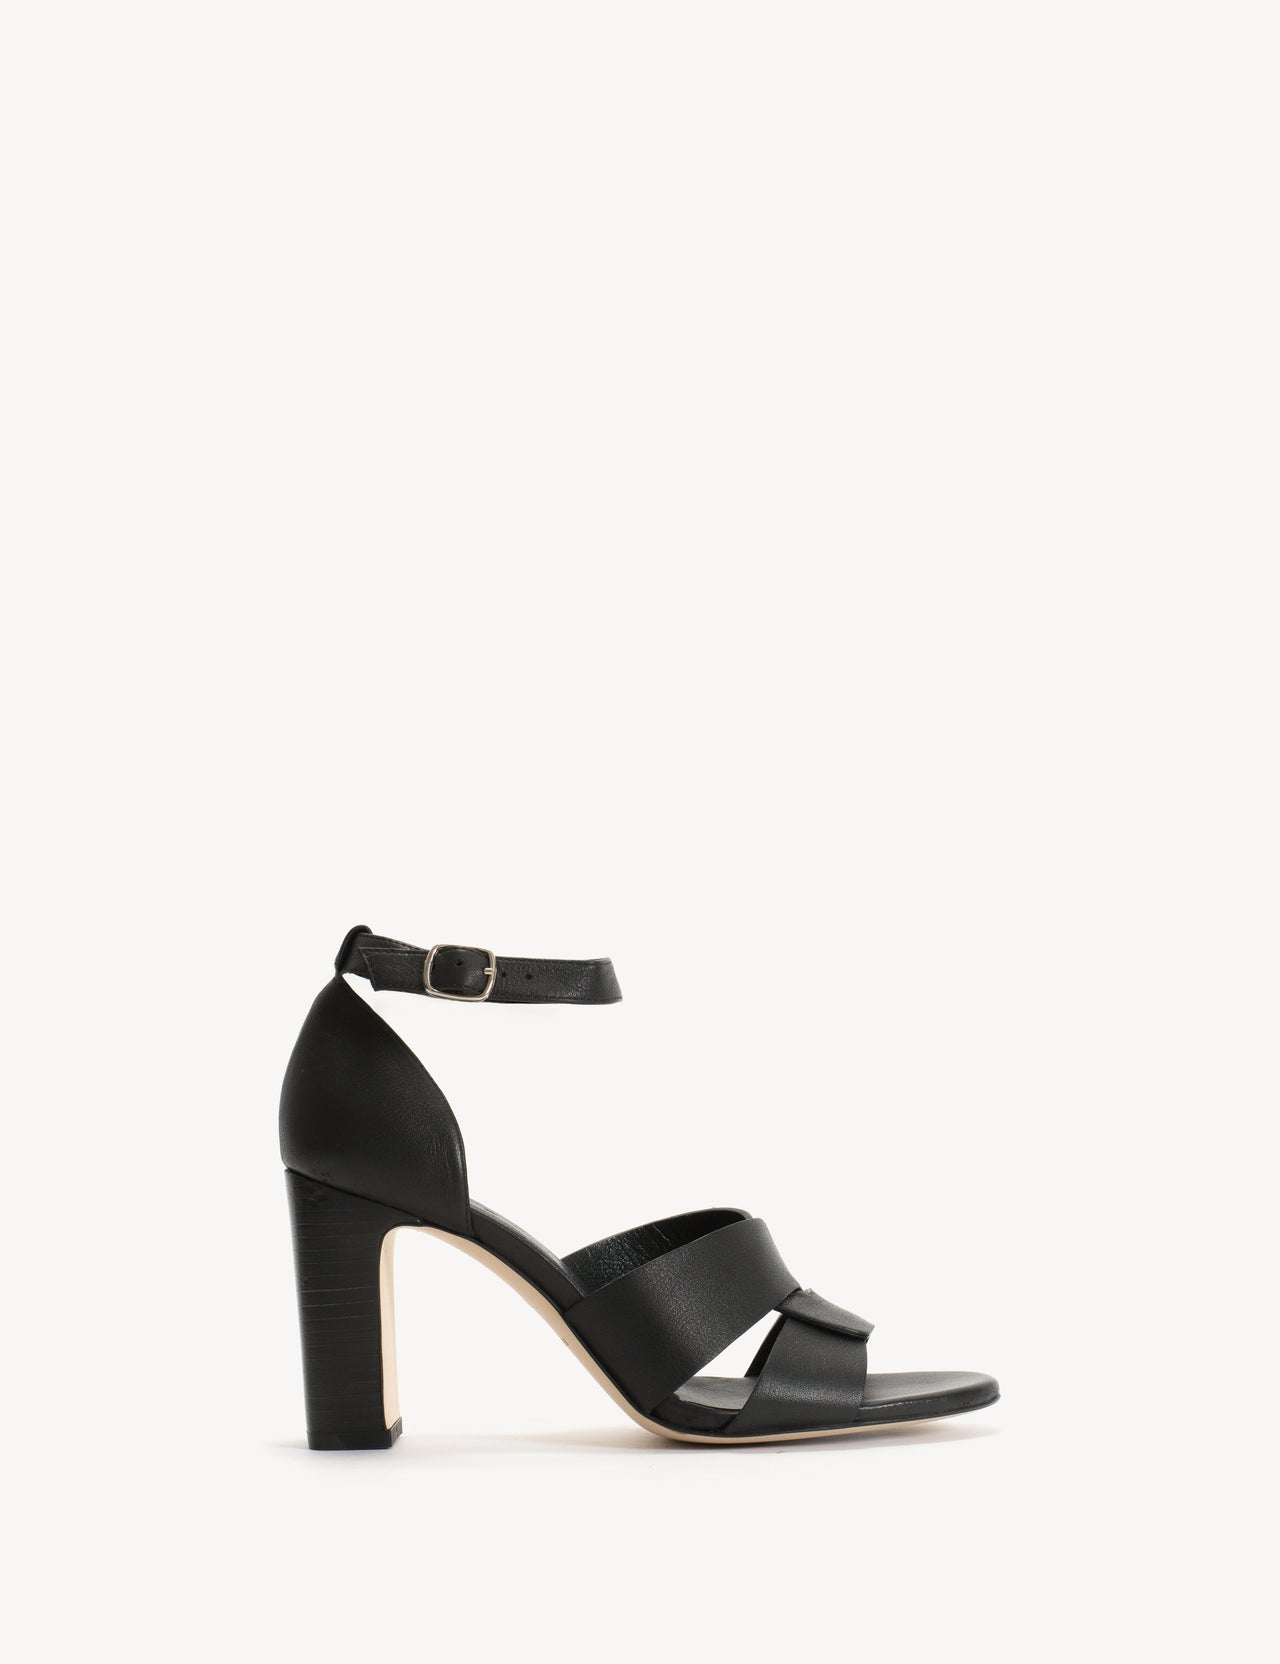 Lulu Sandal In Black Calfskin with 75mm Heel